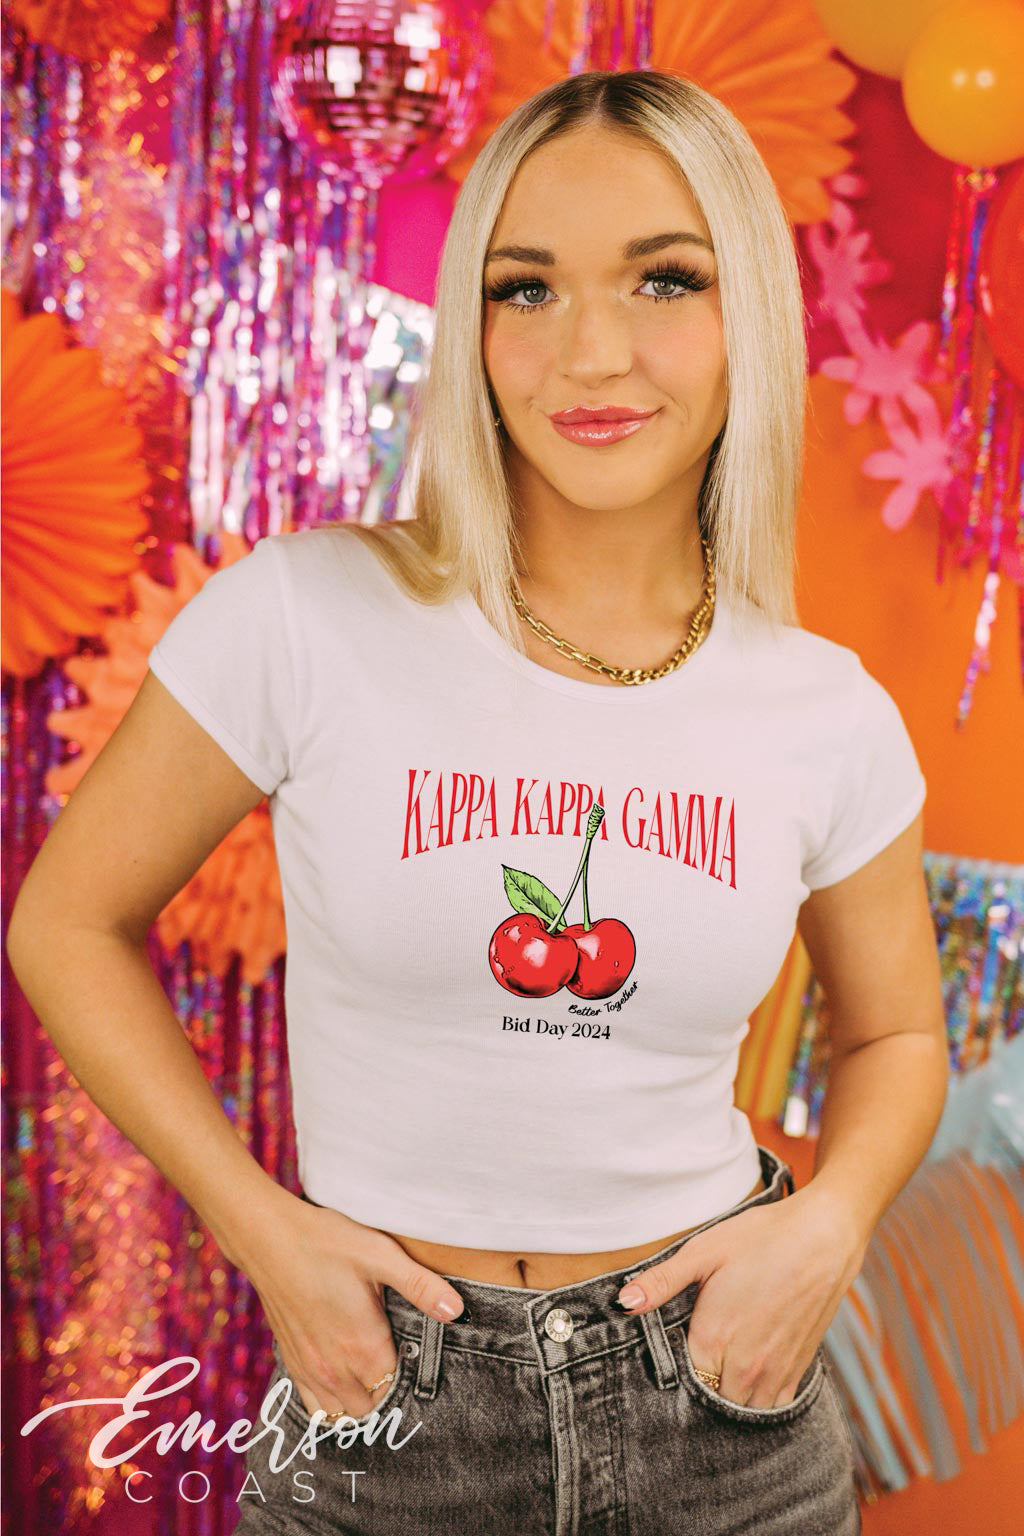 Kappa Kappa Gamma Cherry Bomb Bid Day Baby Tee